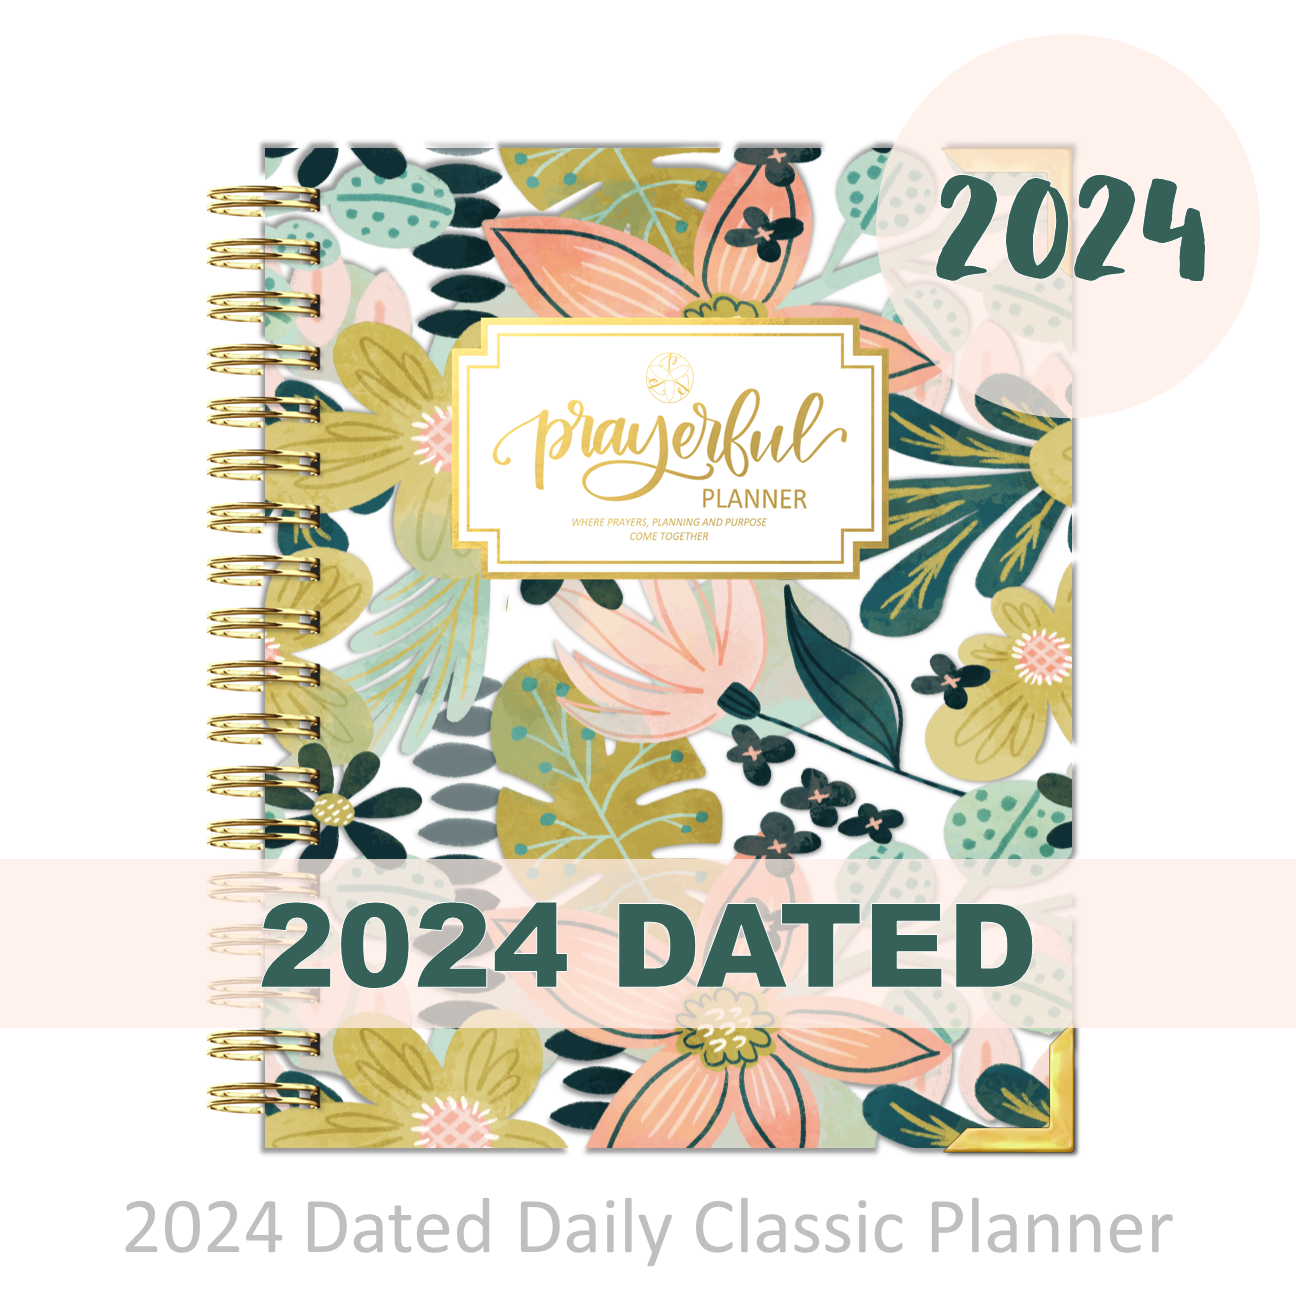 2024 Daily JOY - Prayerful Planner Dated